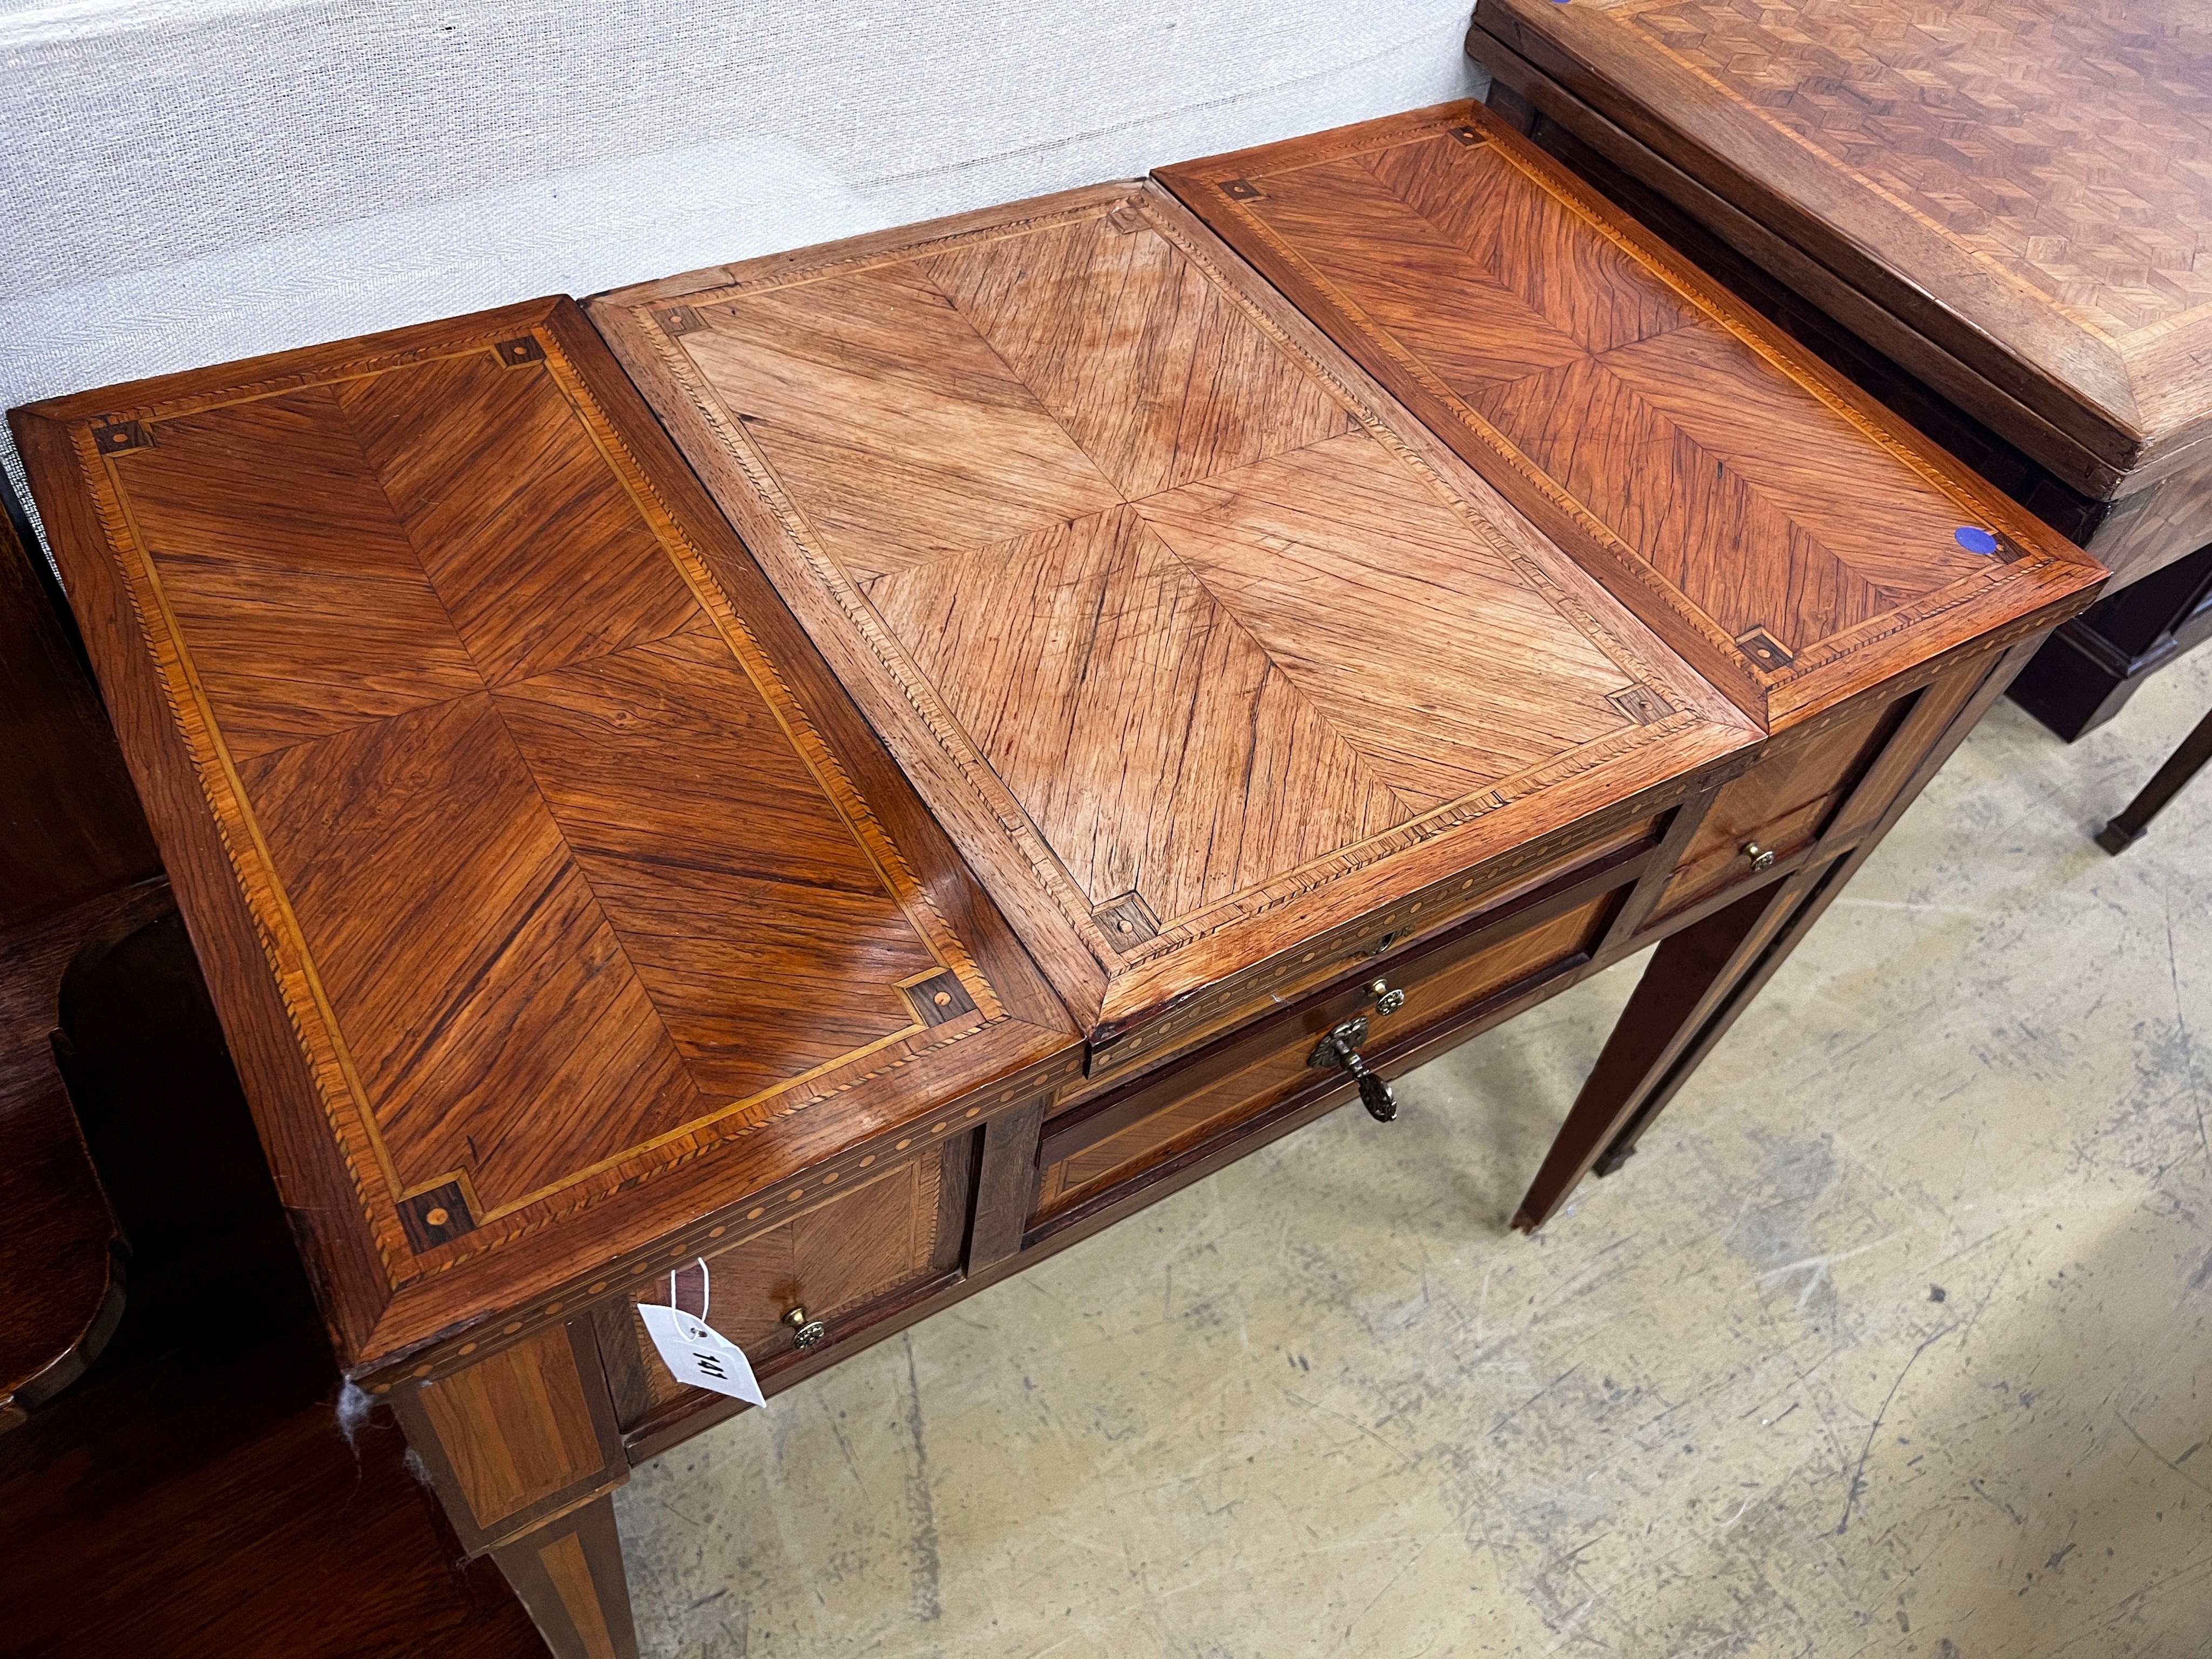 A 19th century Italian kingwood dressing table, width 80cm, depth 47cm, height 74cm